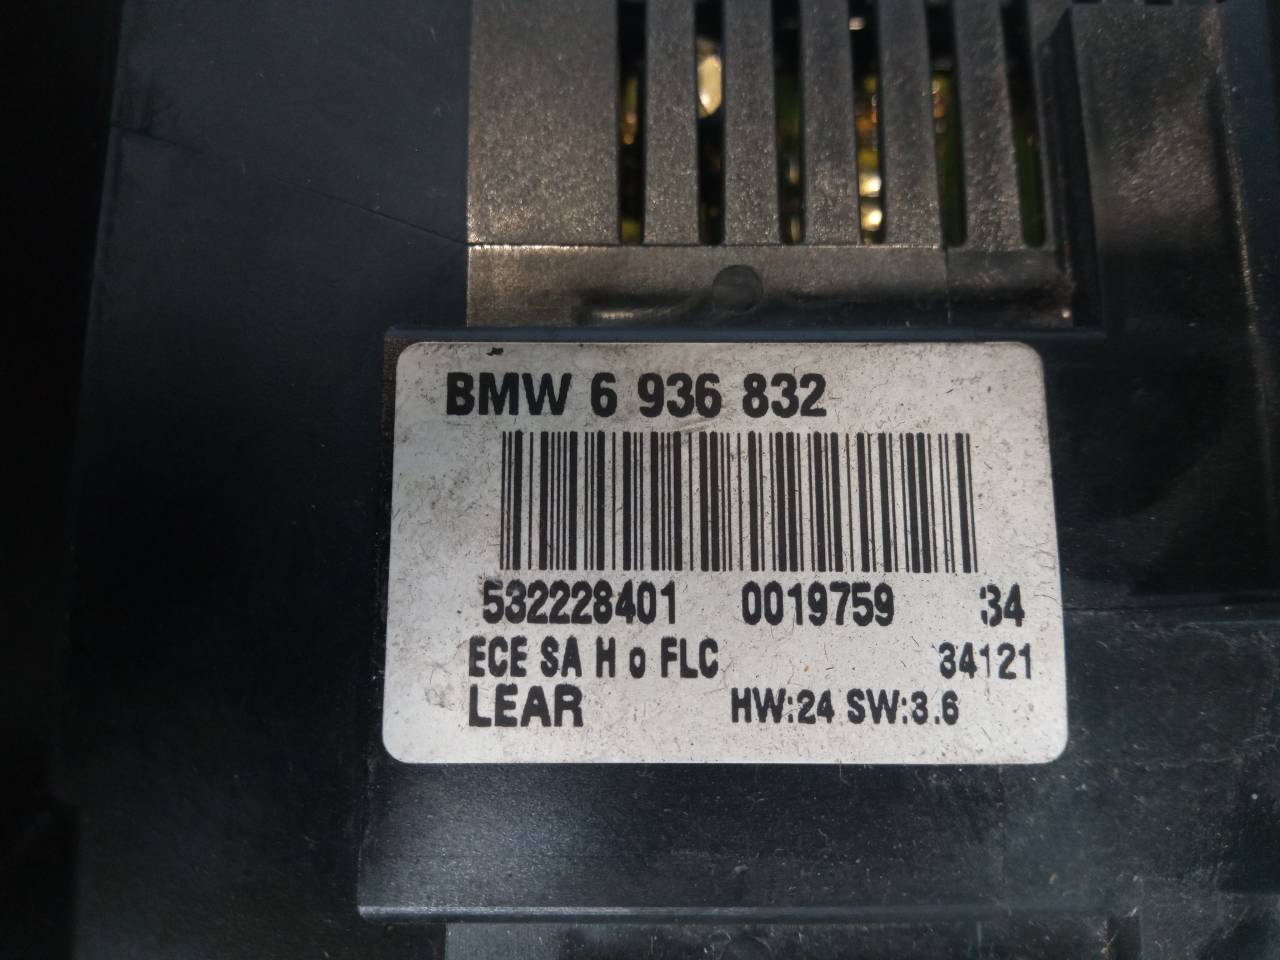 BMW 3 Series E46 (1997-2006) Headlight Switch Control Unit 6936832, 532228401 23697889